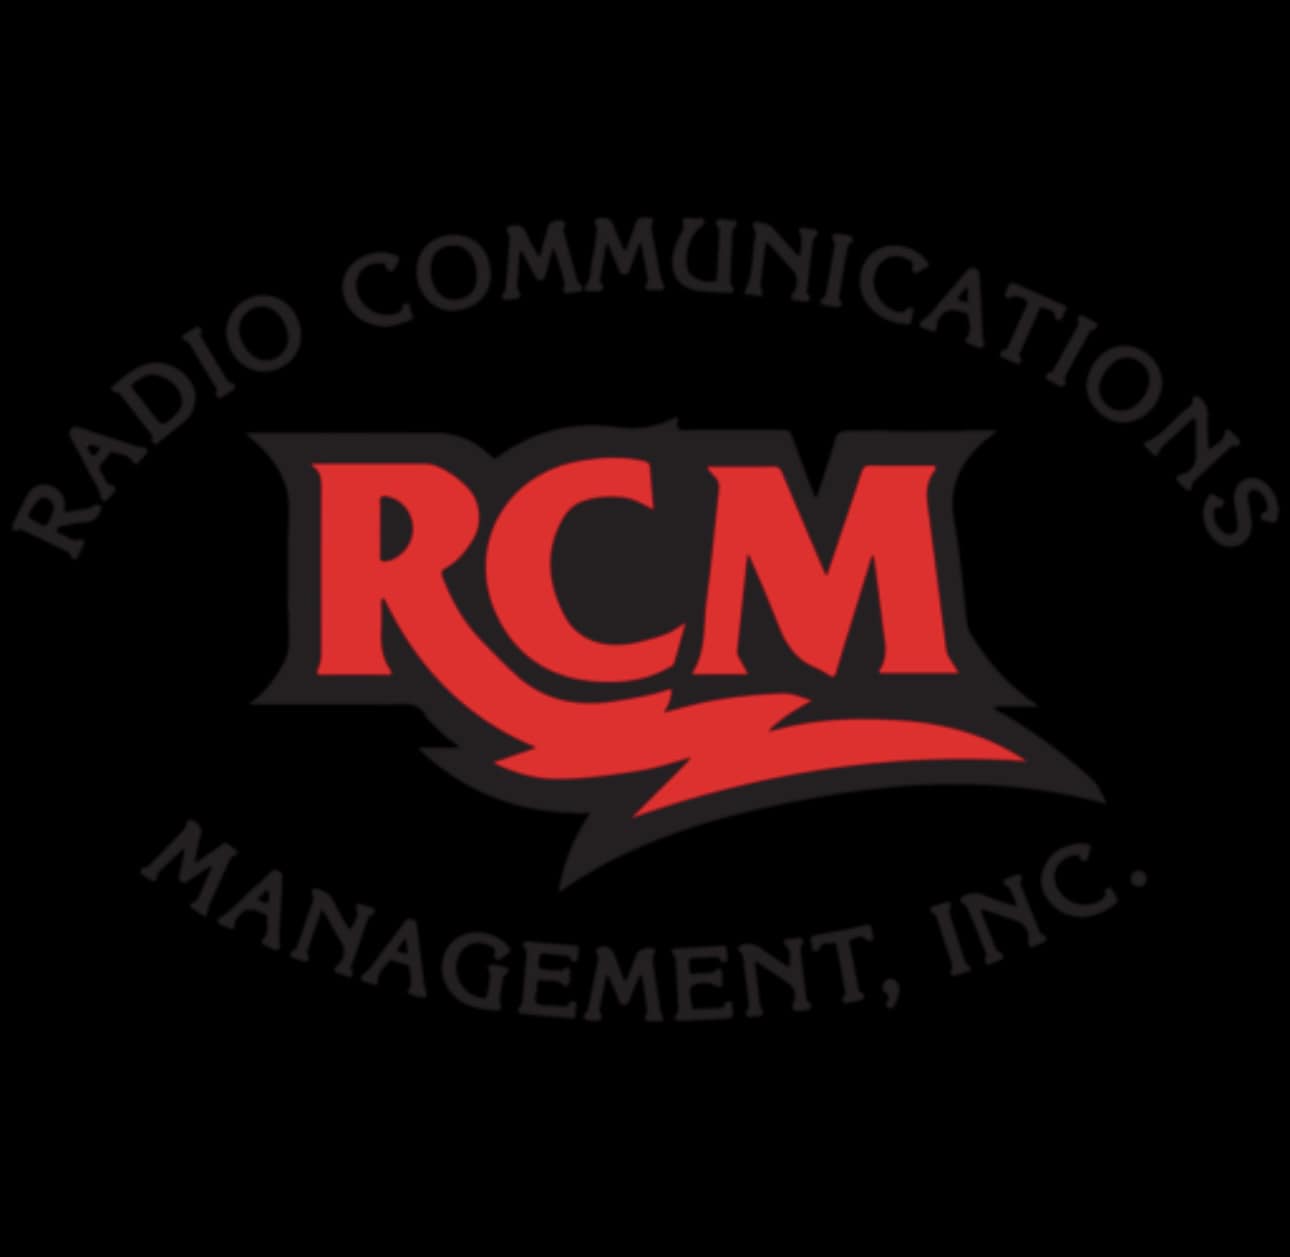 Radio Communications Management, Inc.